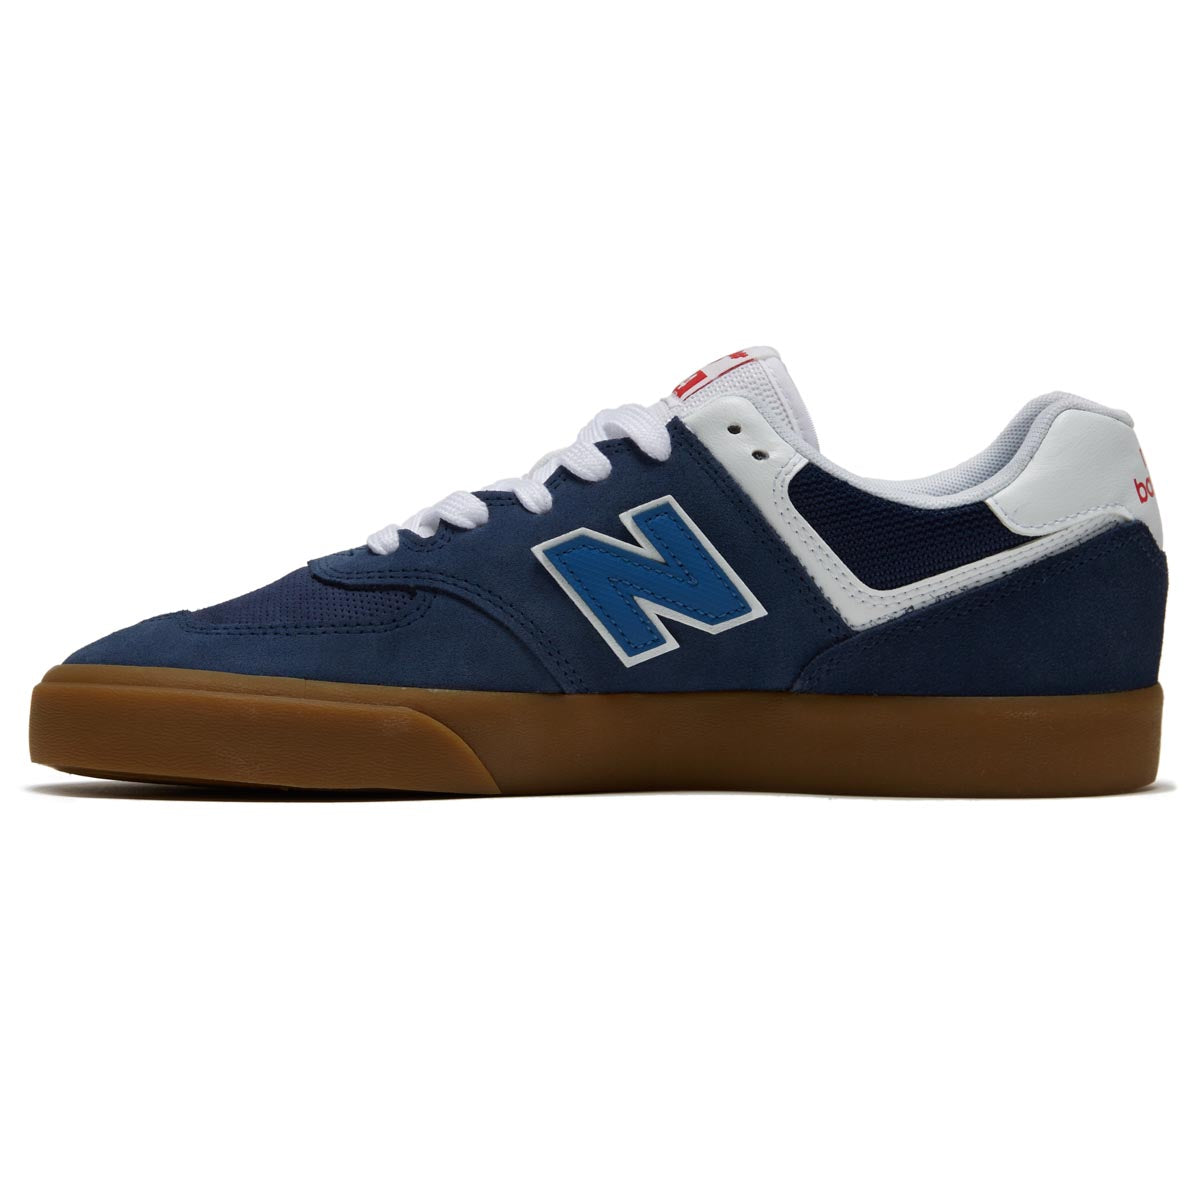 New Balance 574 Vulc Shoes - Navy/Gum image 2